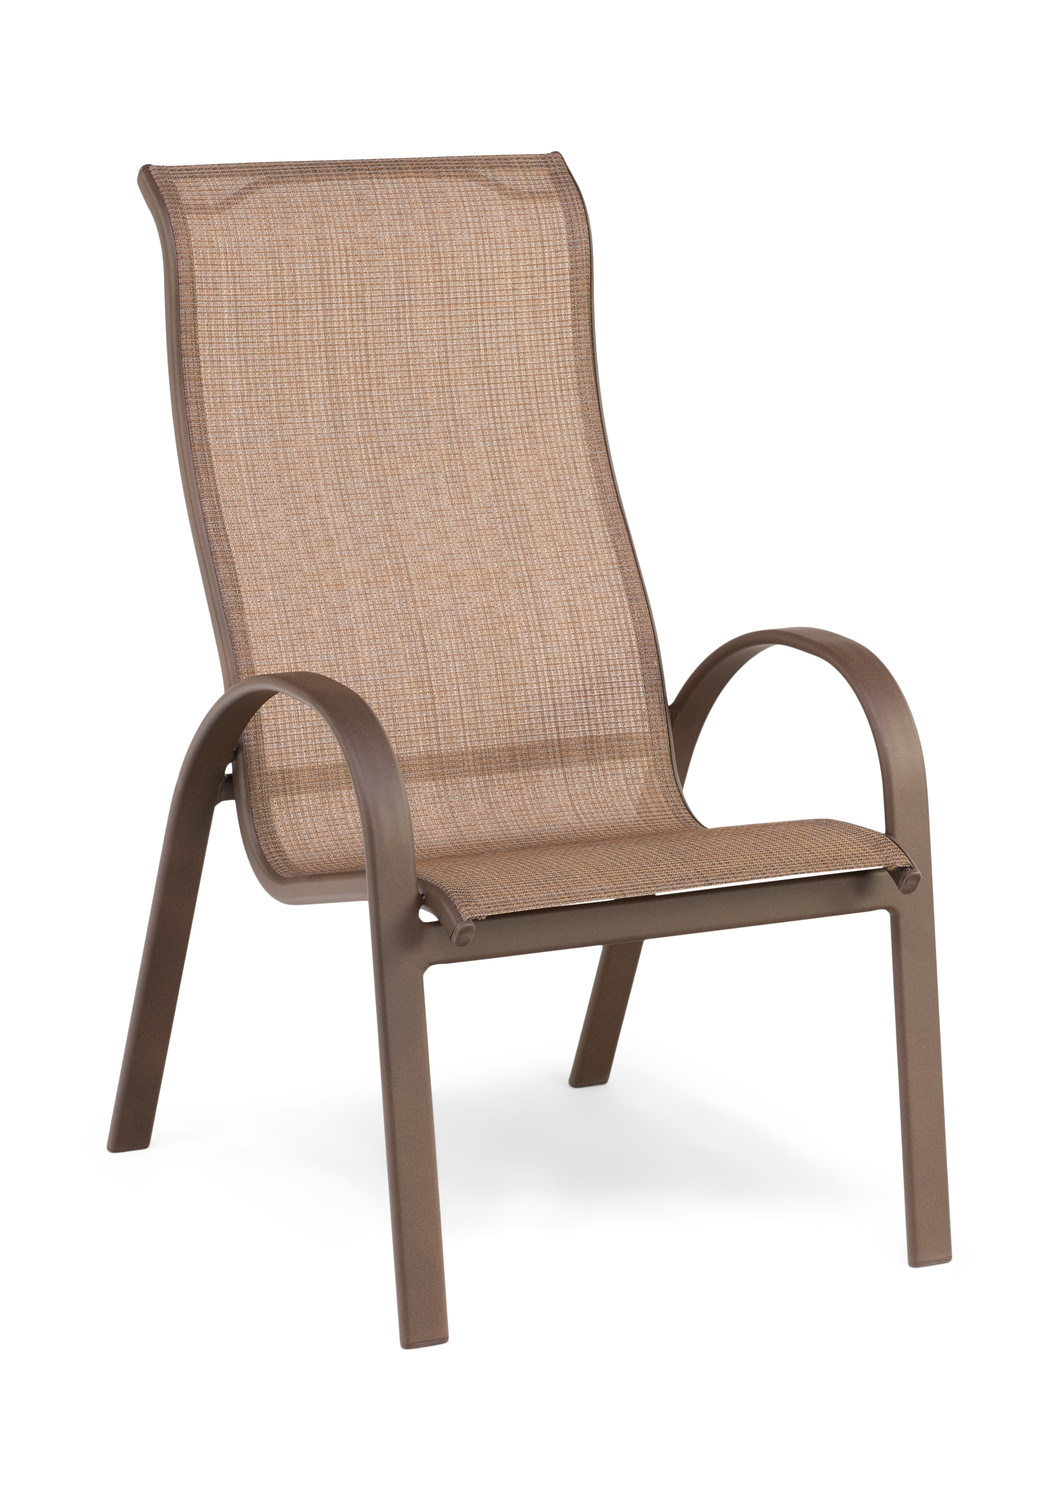 edgewater iii sling chair